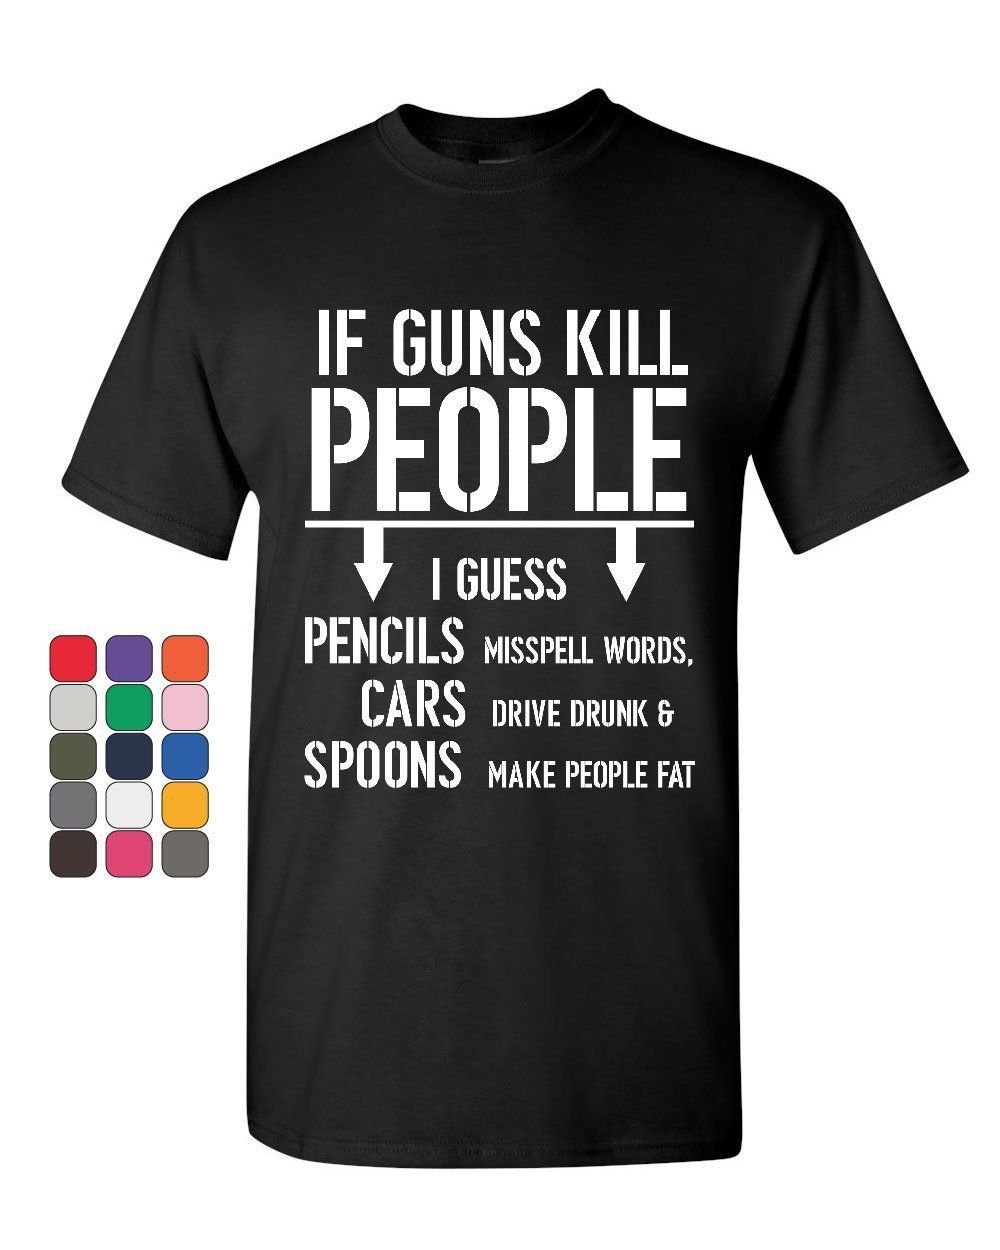 If Guns Kill People T-Shirt 2nd Amendment Gun Rights Funny 2A Mens Tee Shirt